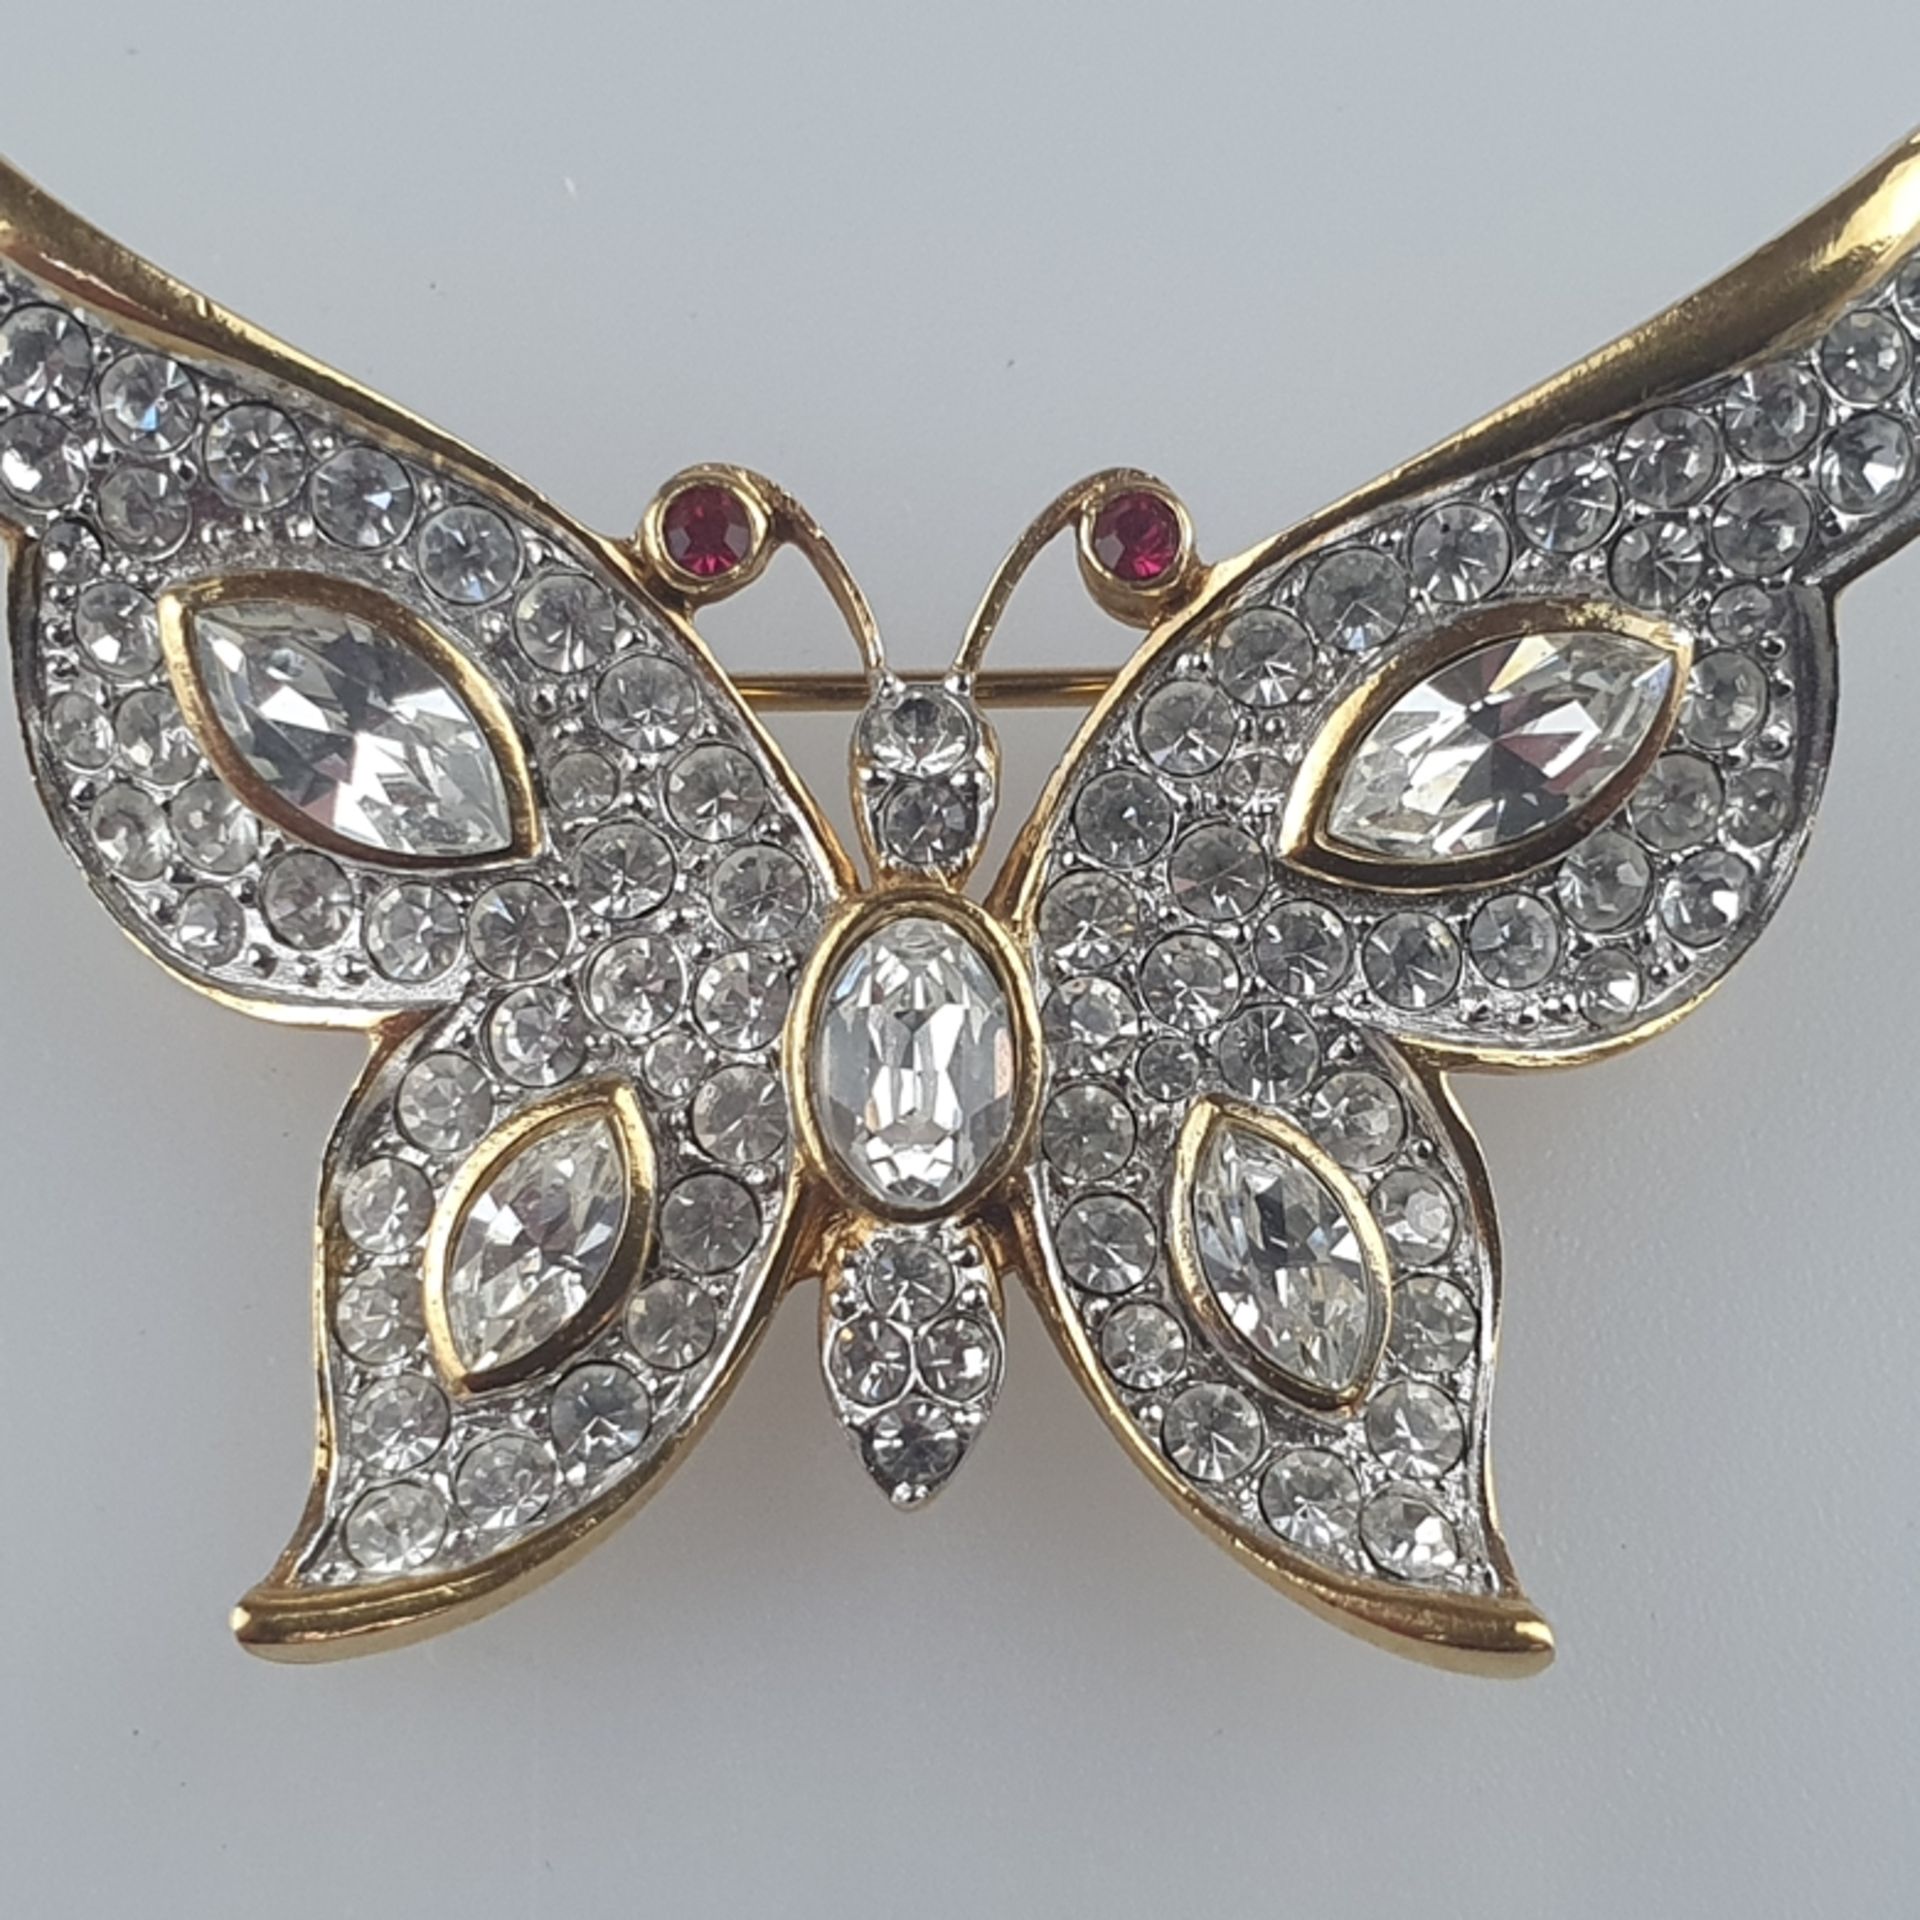 Vintage-Brosche - Attwood & Sawyer / Großbritannien, filigrane Schmetterlingsform, Metall vergoldet - Image 2 of 3